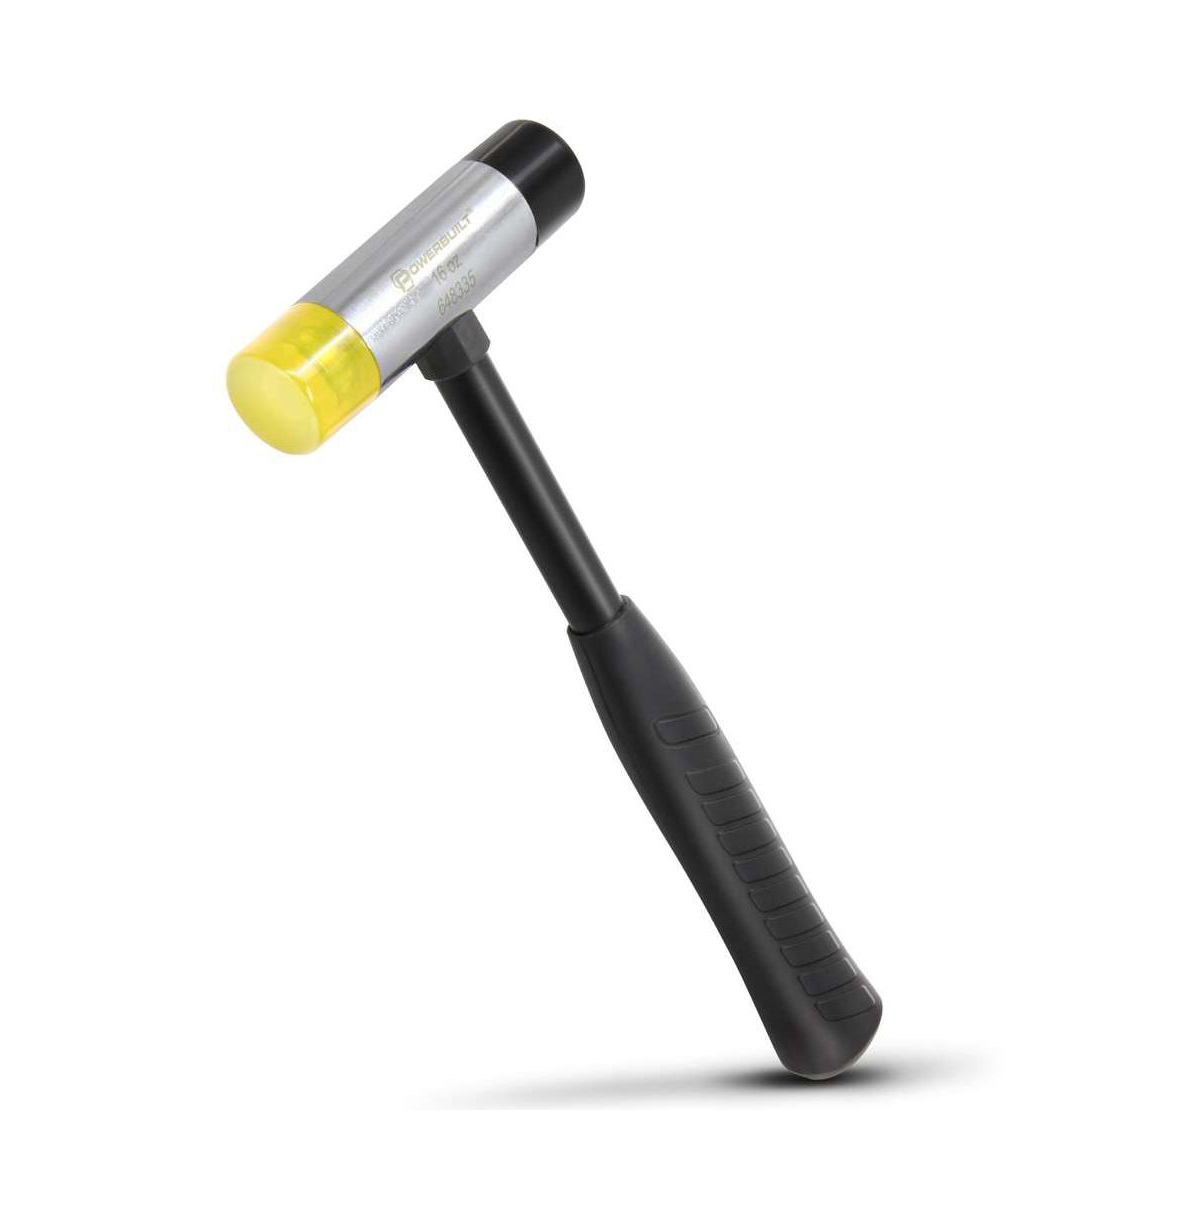 16 Ounce Soft Face Hammer with Lightweight Non-Slip Grip - Yellow